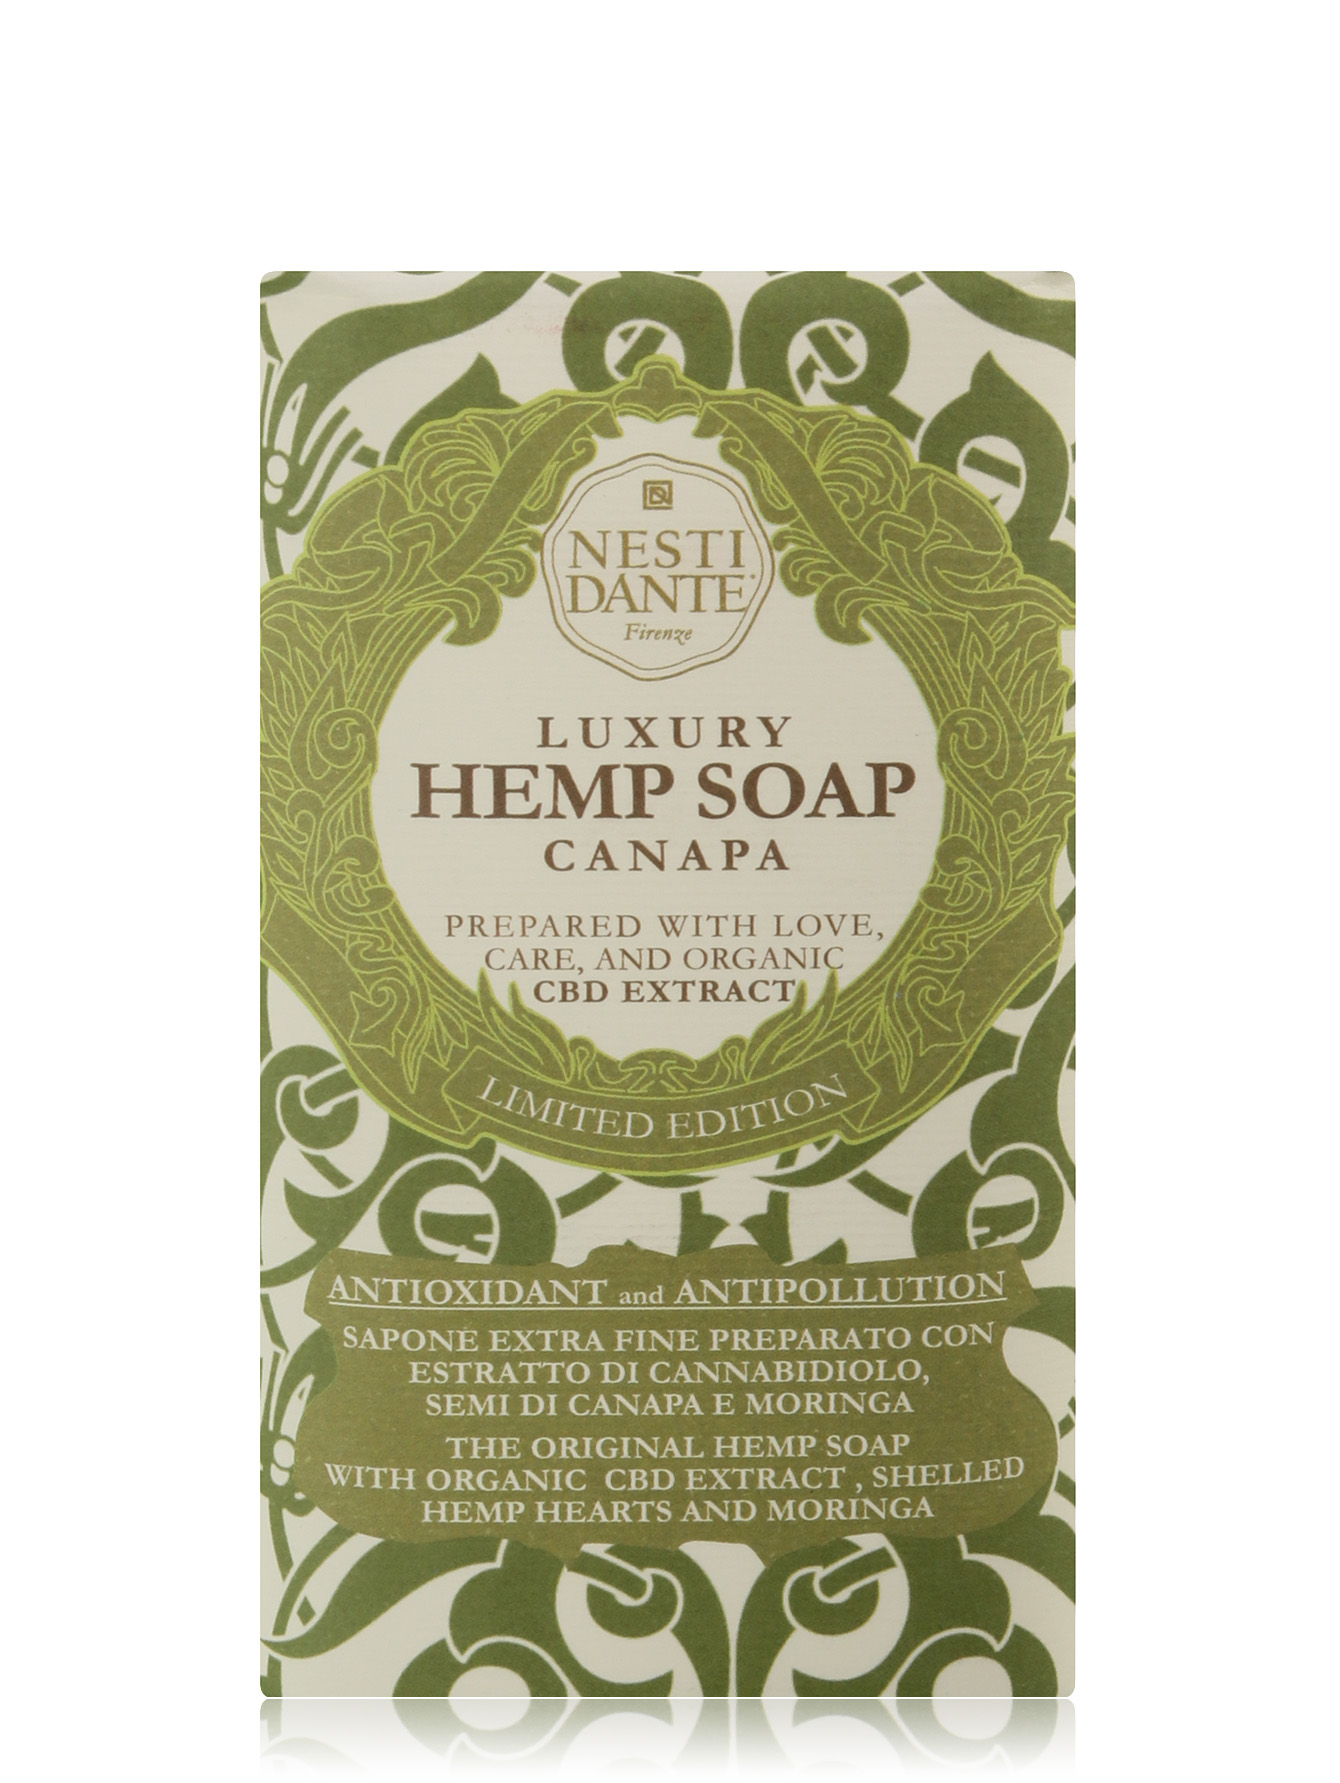 Мыло Hemp Soap Canapa, 250 г - Общий вид